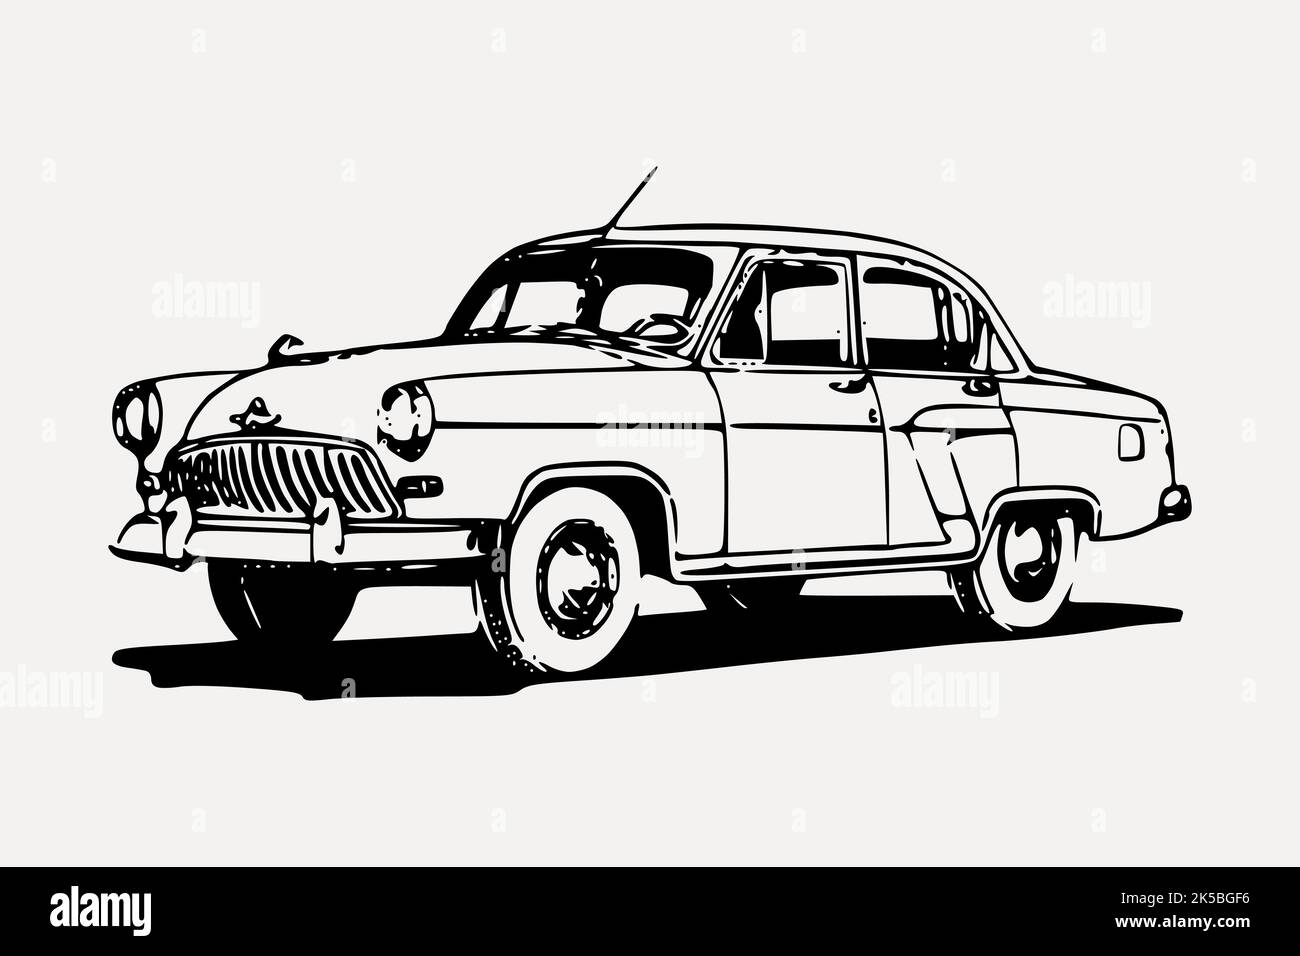 Ambassador car sketches by Prateek Dave on Dribbble